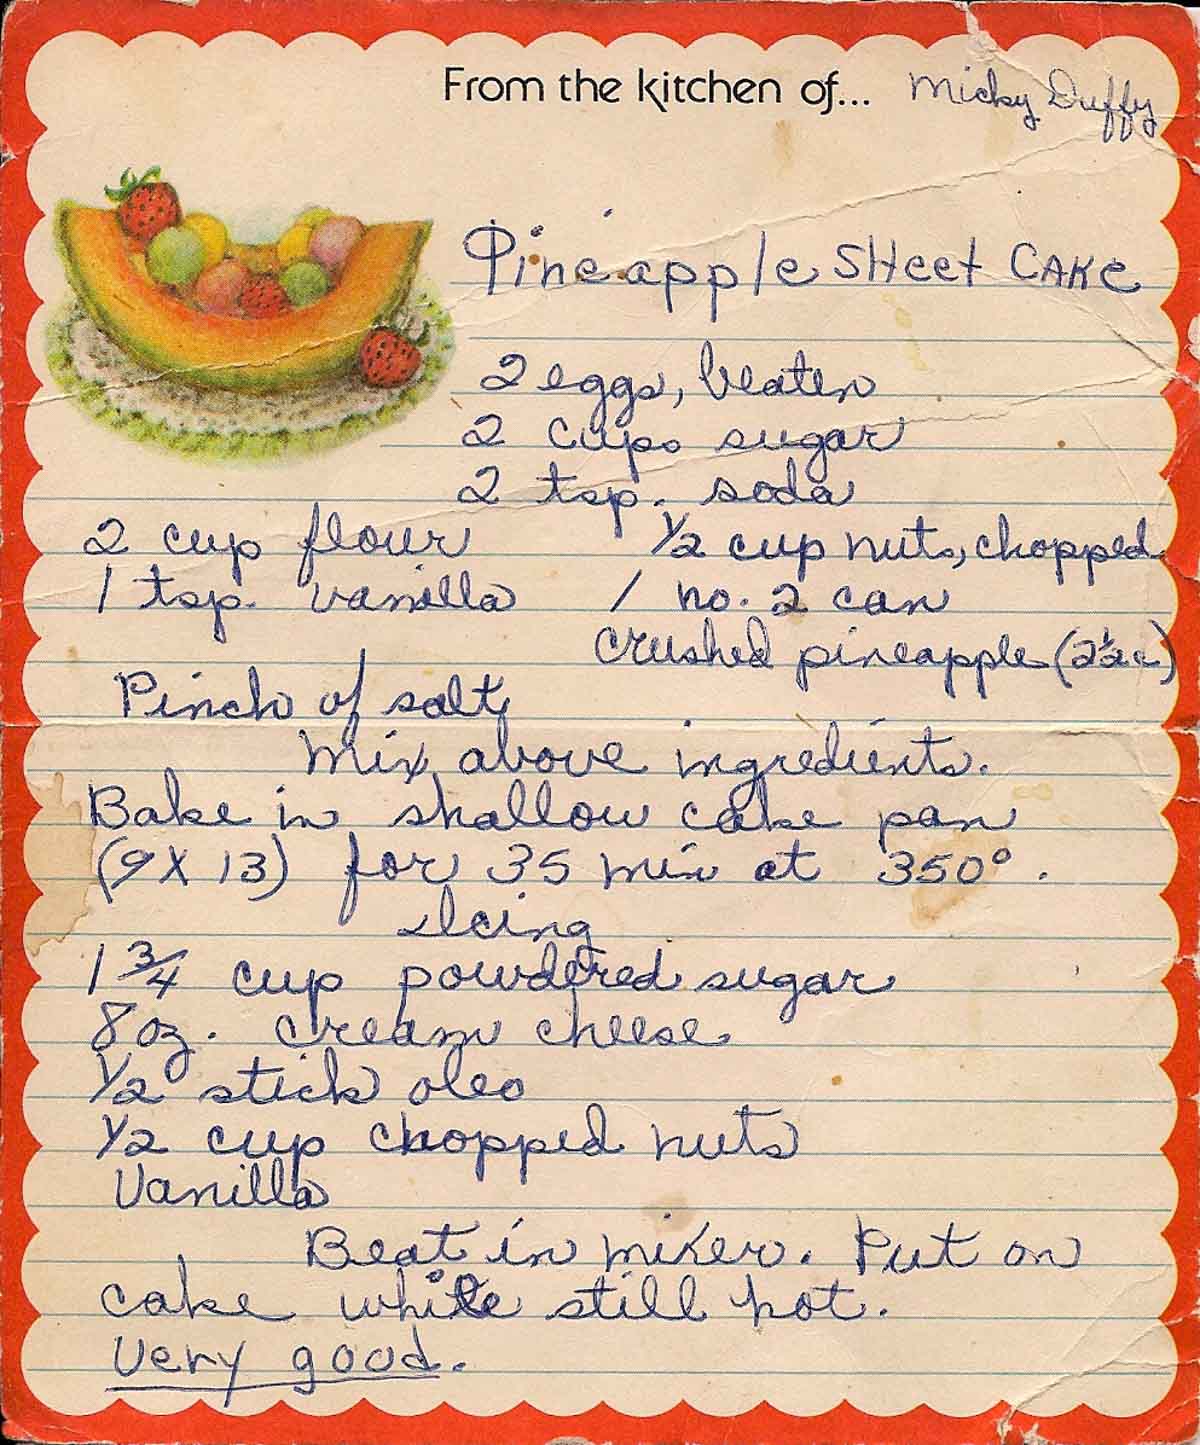 handwritten recipe card for Pineapple Sheet Cake.